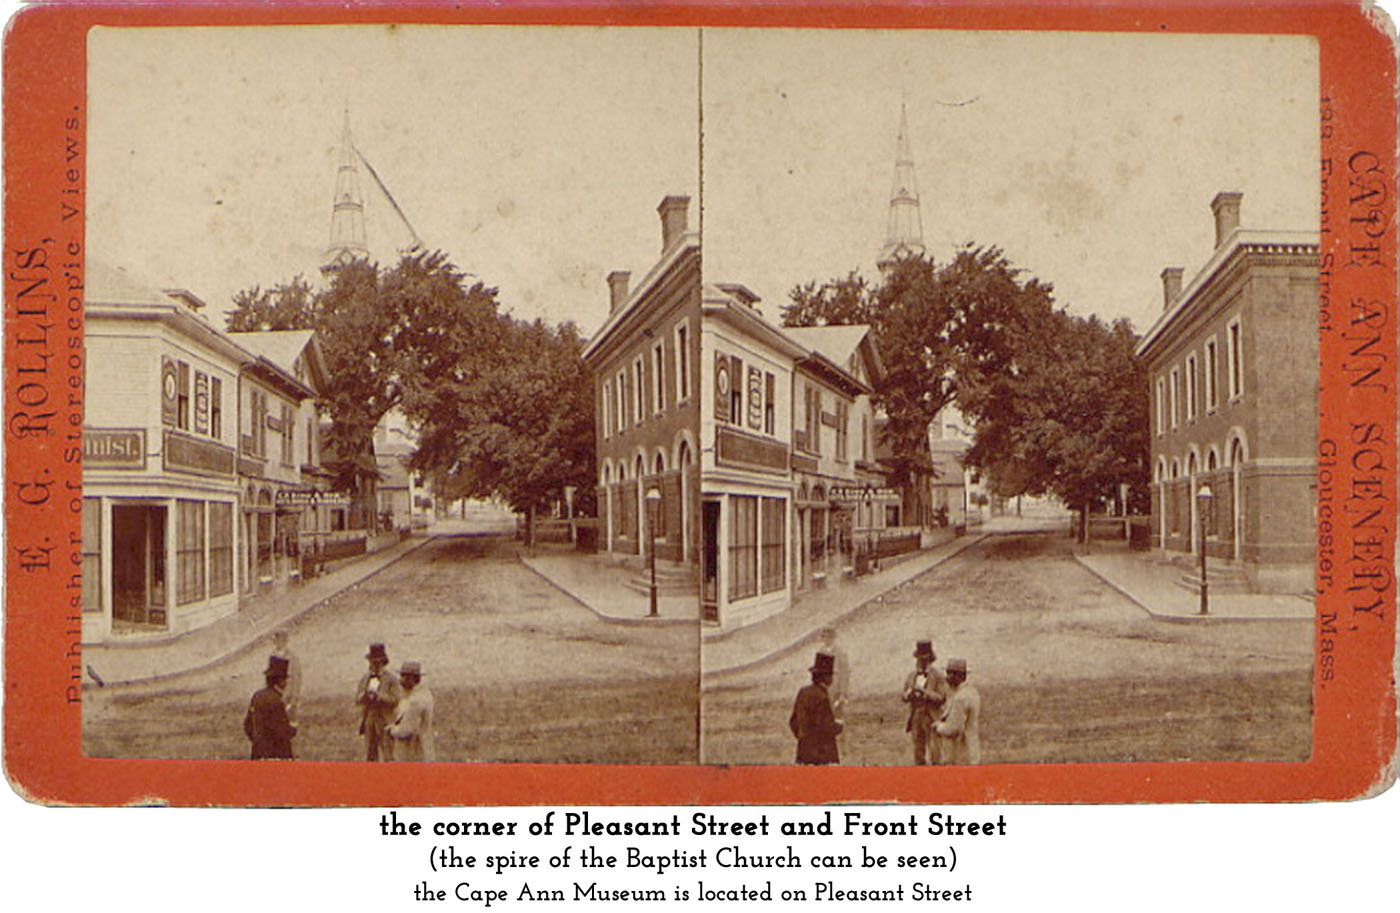 Pleasant Street